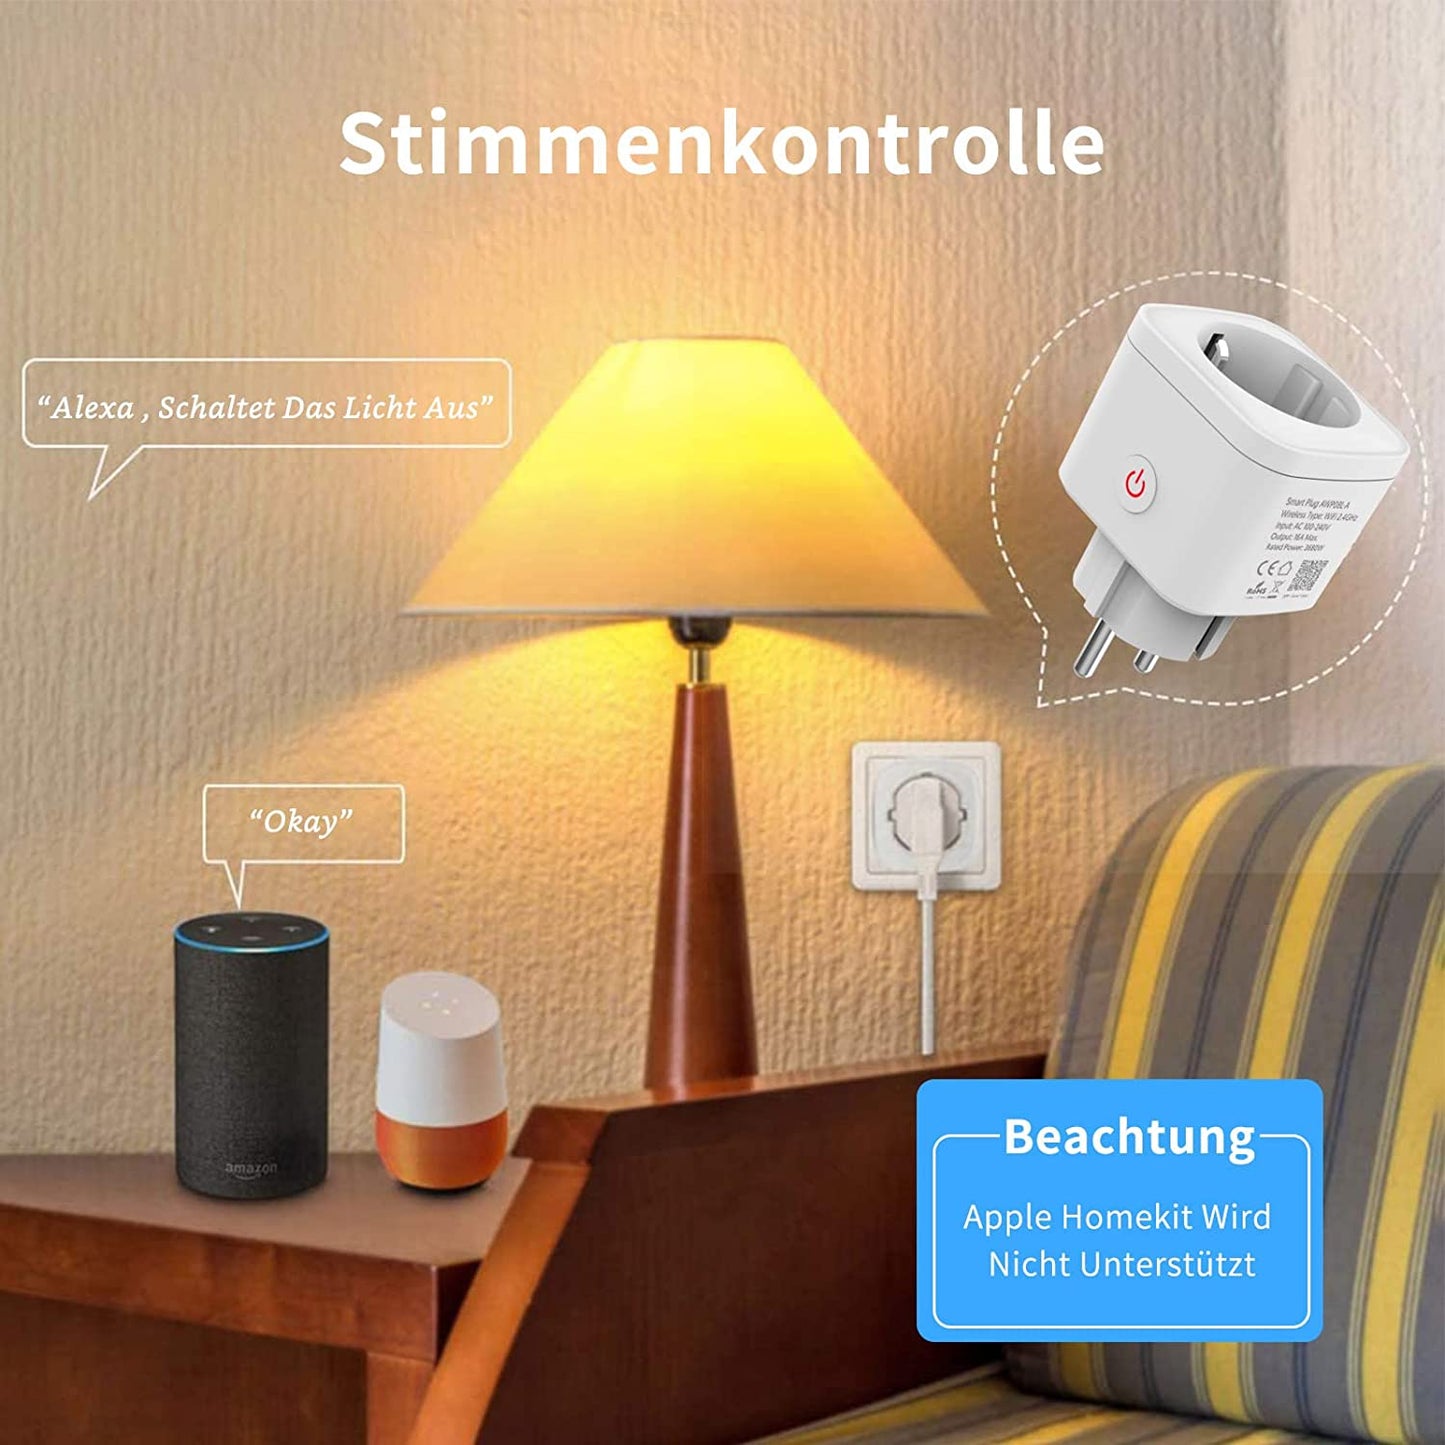 AvatarControls Matter Smart Wi-Fi Plug Mini 16A (EU Version)